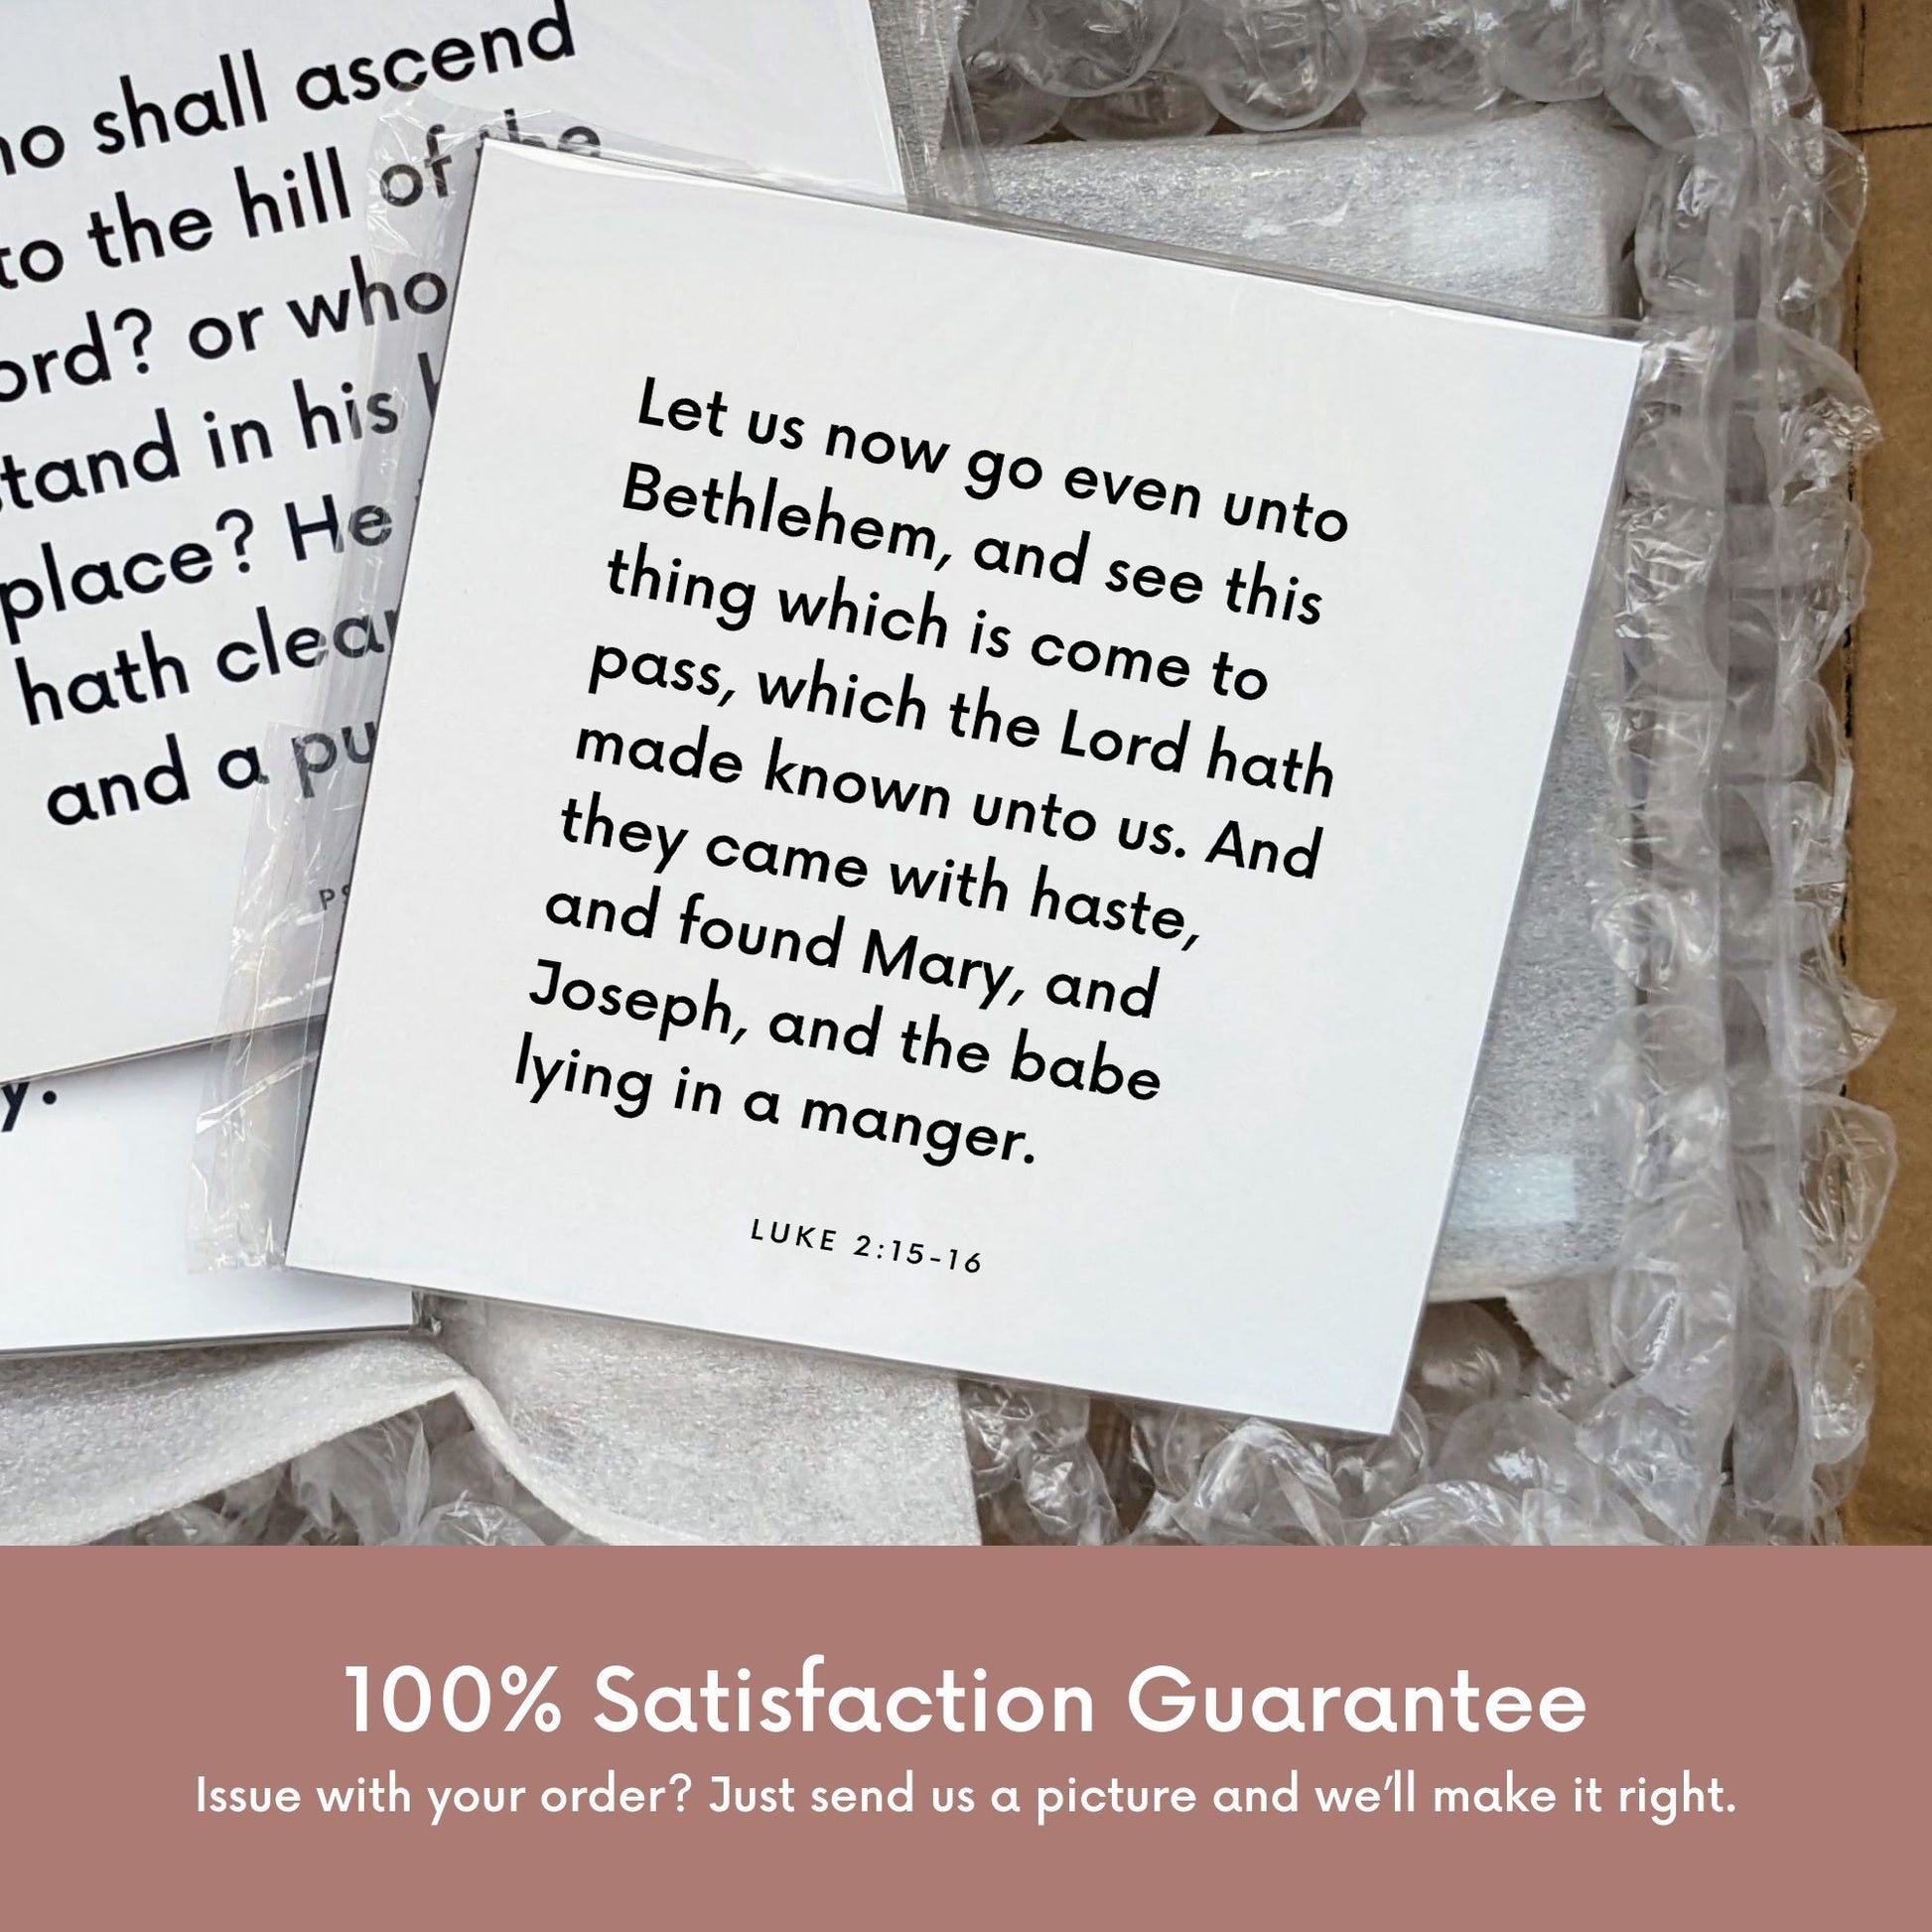 Shipping materials for scripture tile of Luke 2:15-16 - "Let us now go even unto Bethlehem"